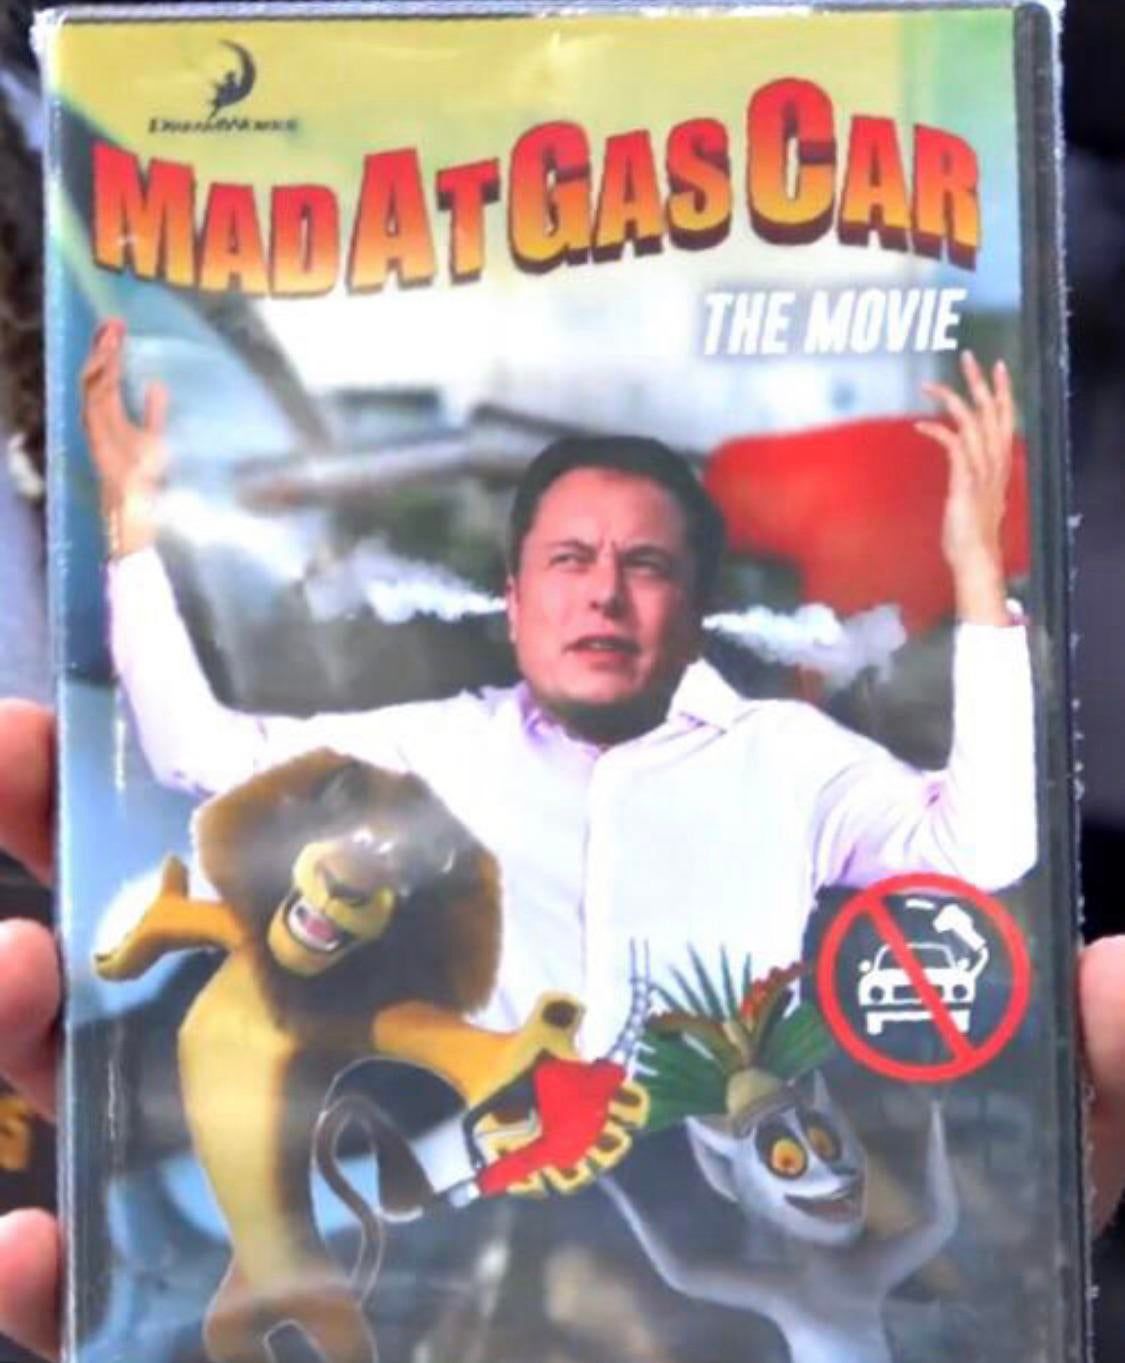 Madatgascar the movie